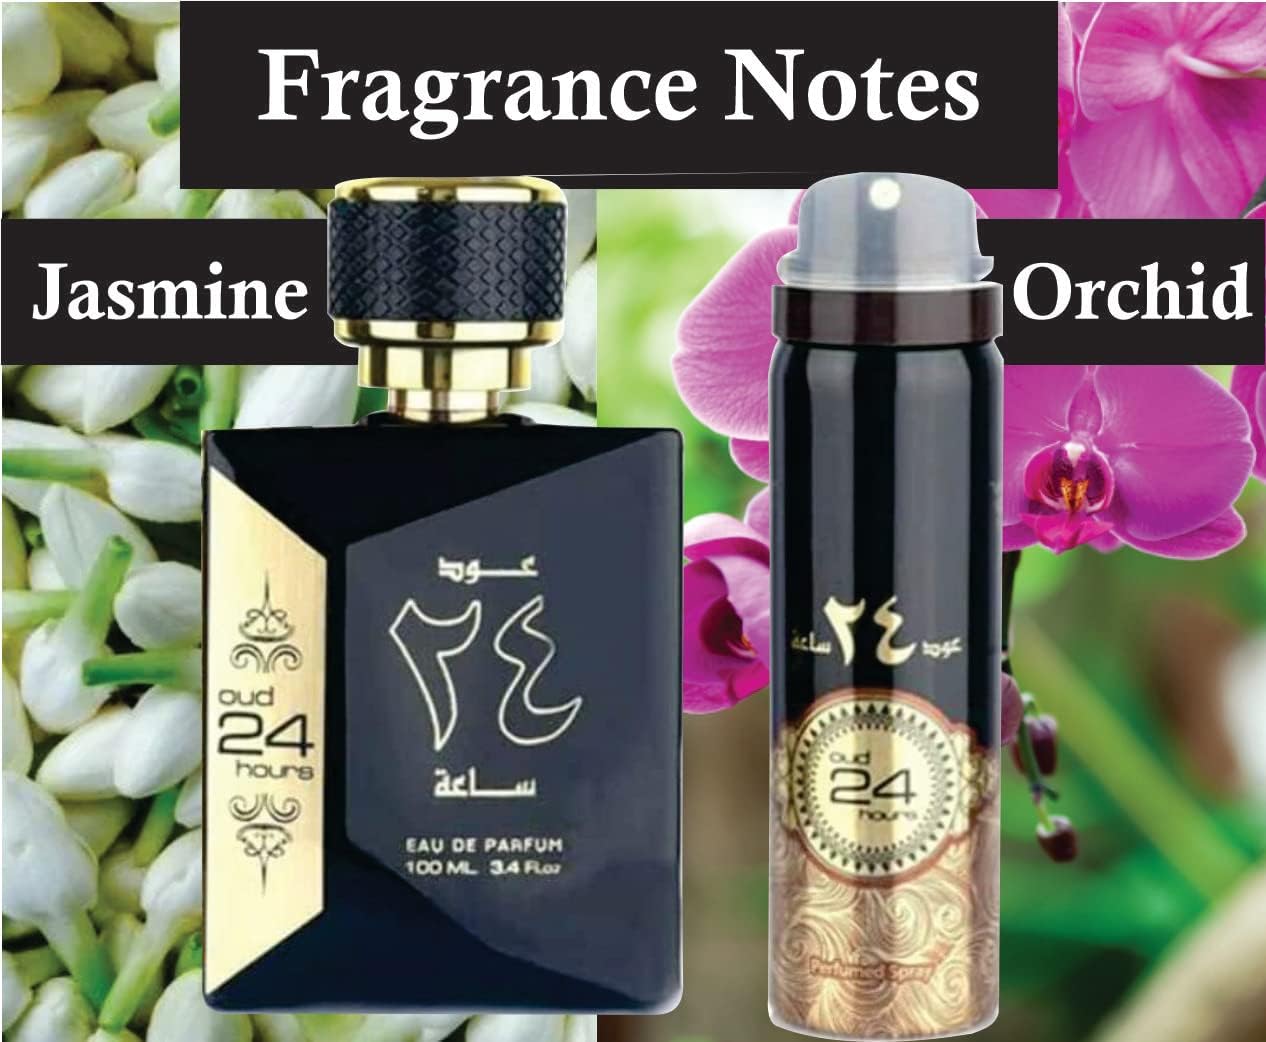 Oud 24 hours | Oud 24 hours Eau de Parfum for Men | Oud and Jasmine fragrance | Oud 24 hours Men perfume Spray 100ml | Oud Perfume Made in Dubai By Sapphire’s Choice